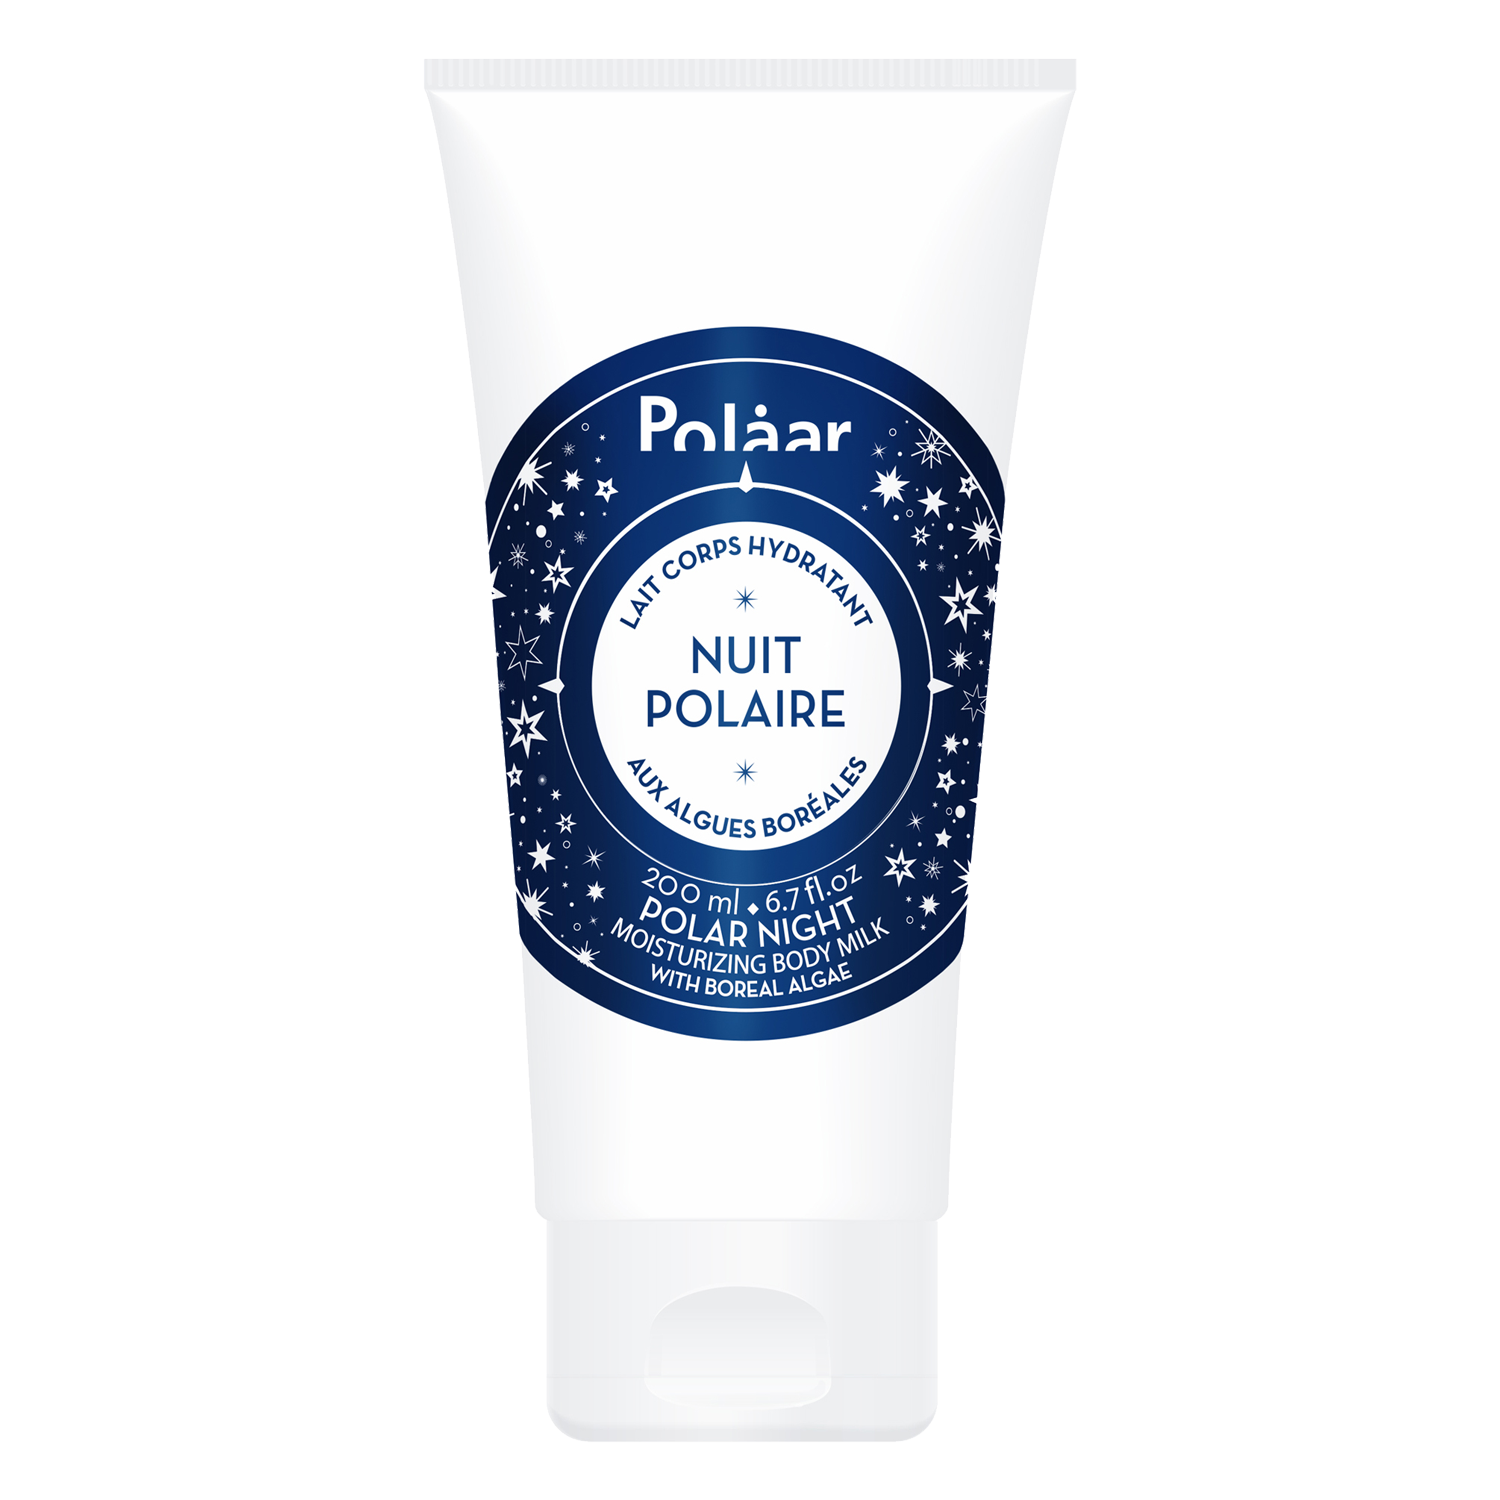 Polaar - Polar Night Moisturizing Body Milk with Boreal Algae - Polaar - Polar Night Moisturizing Body Milk with Boreal Algae - 1